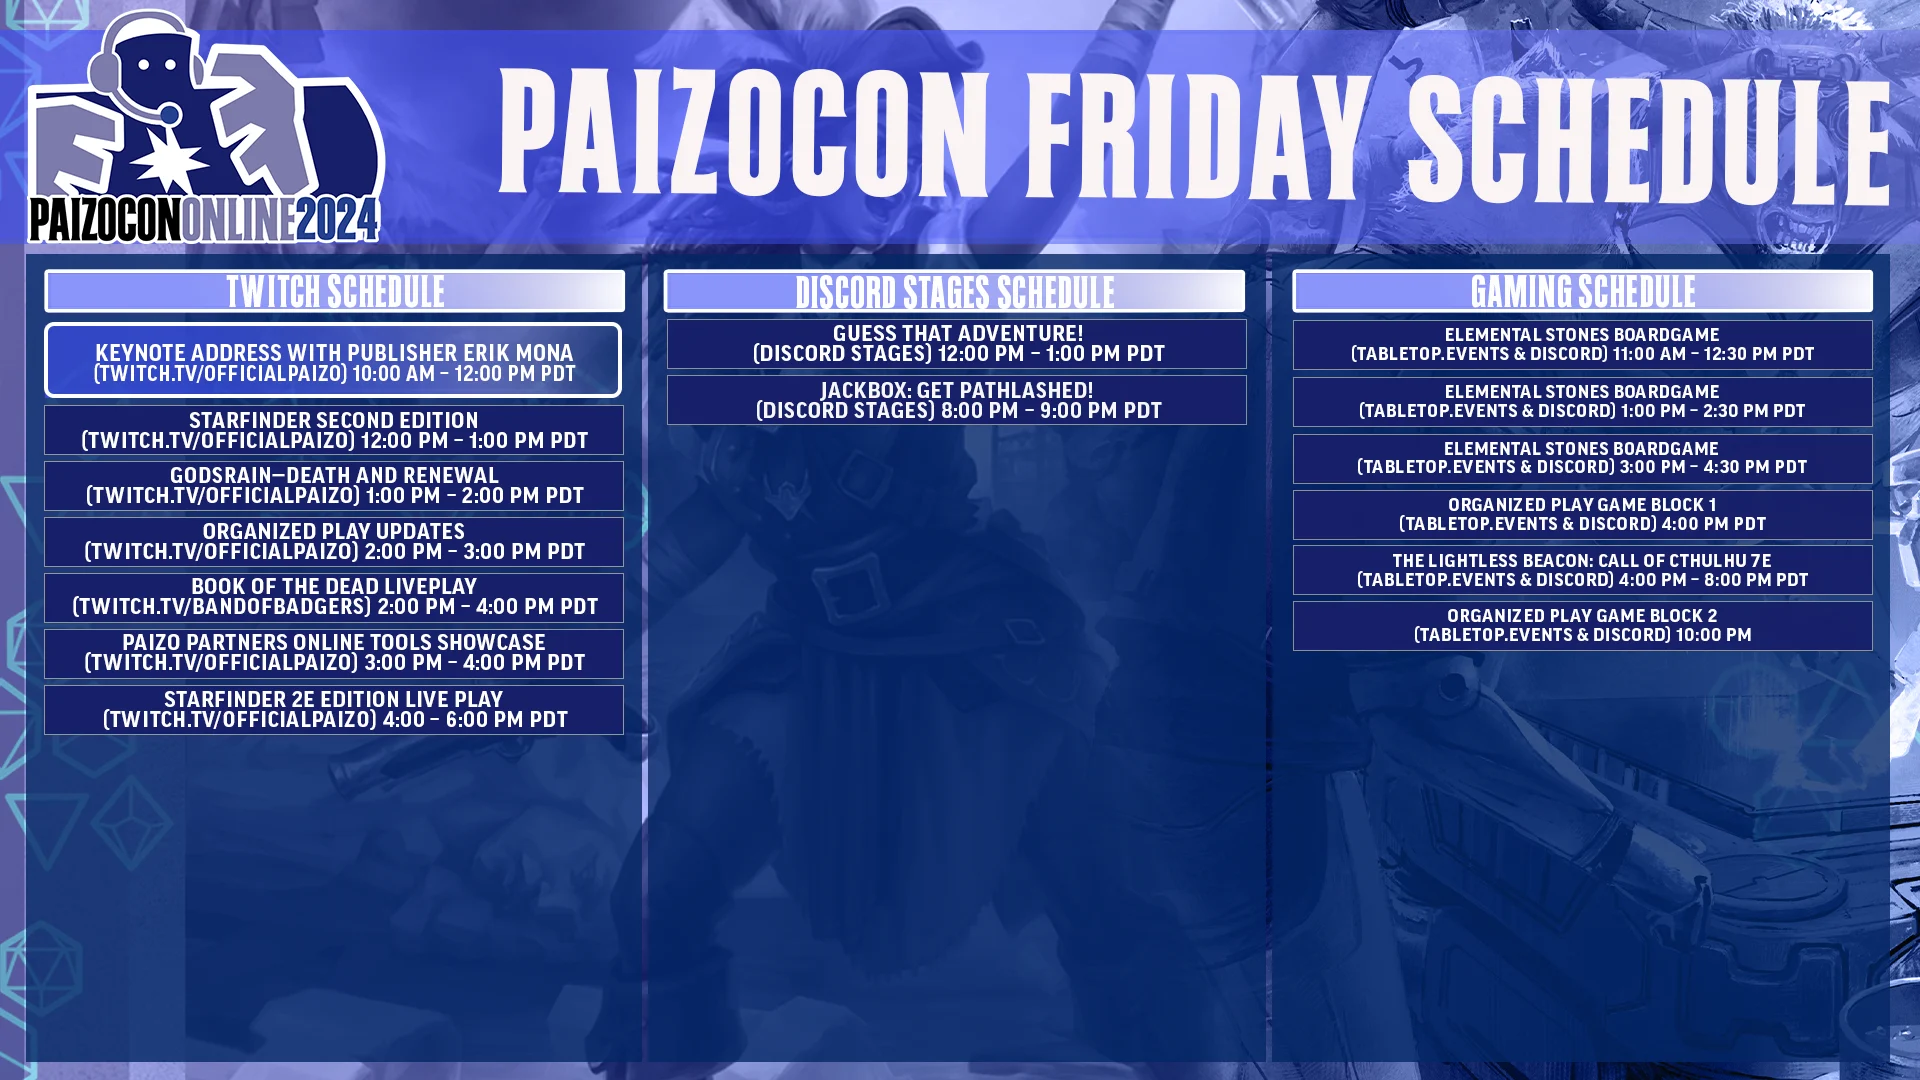 Paizocon Friday Schedule.